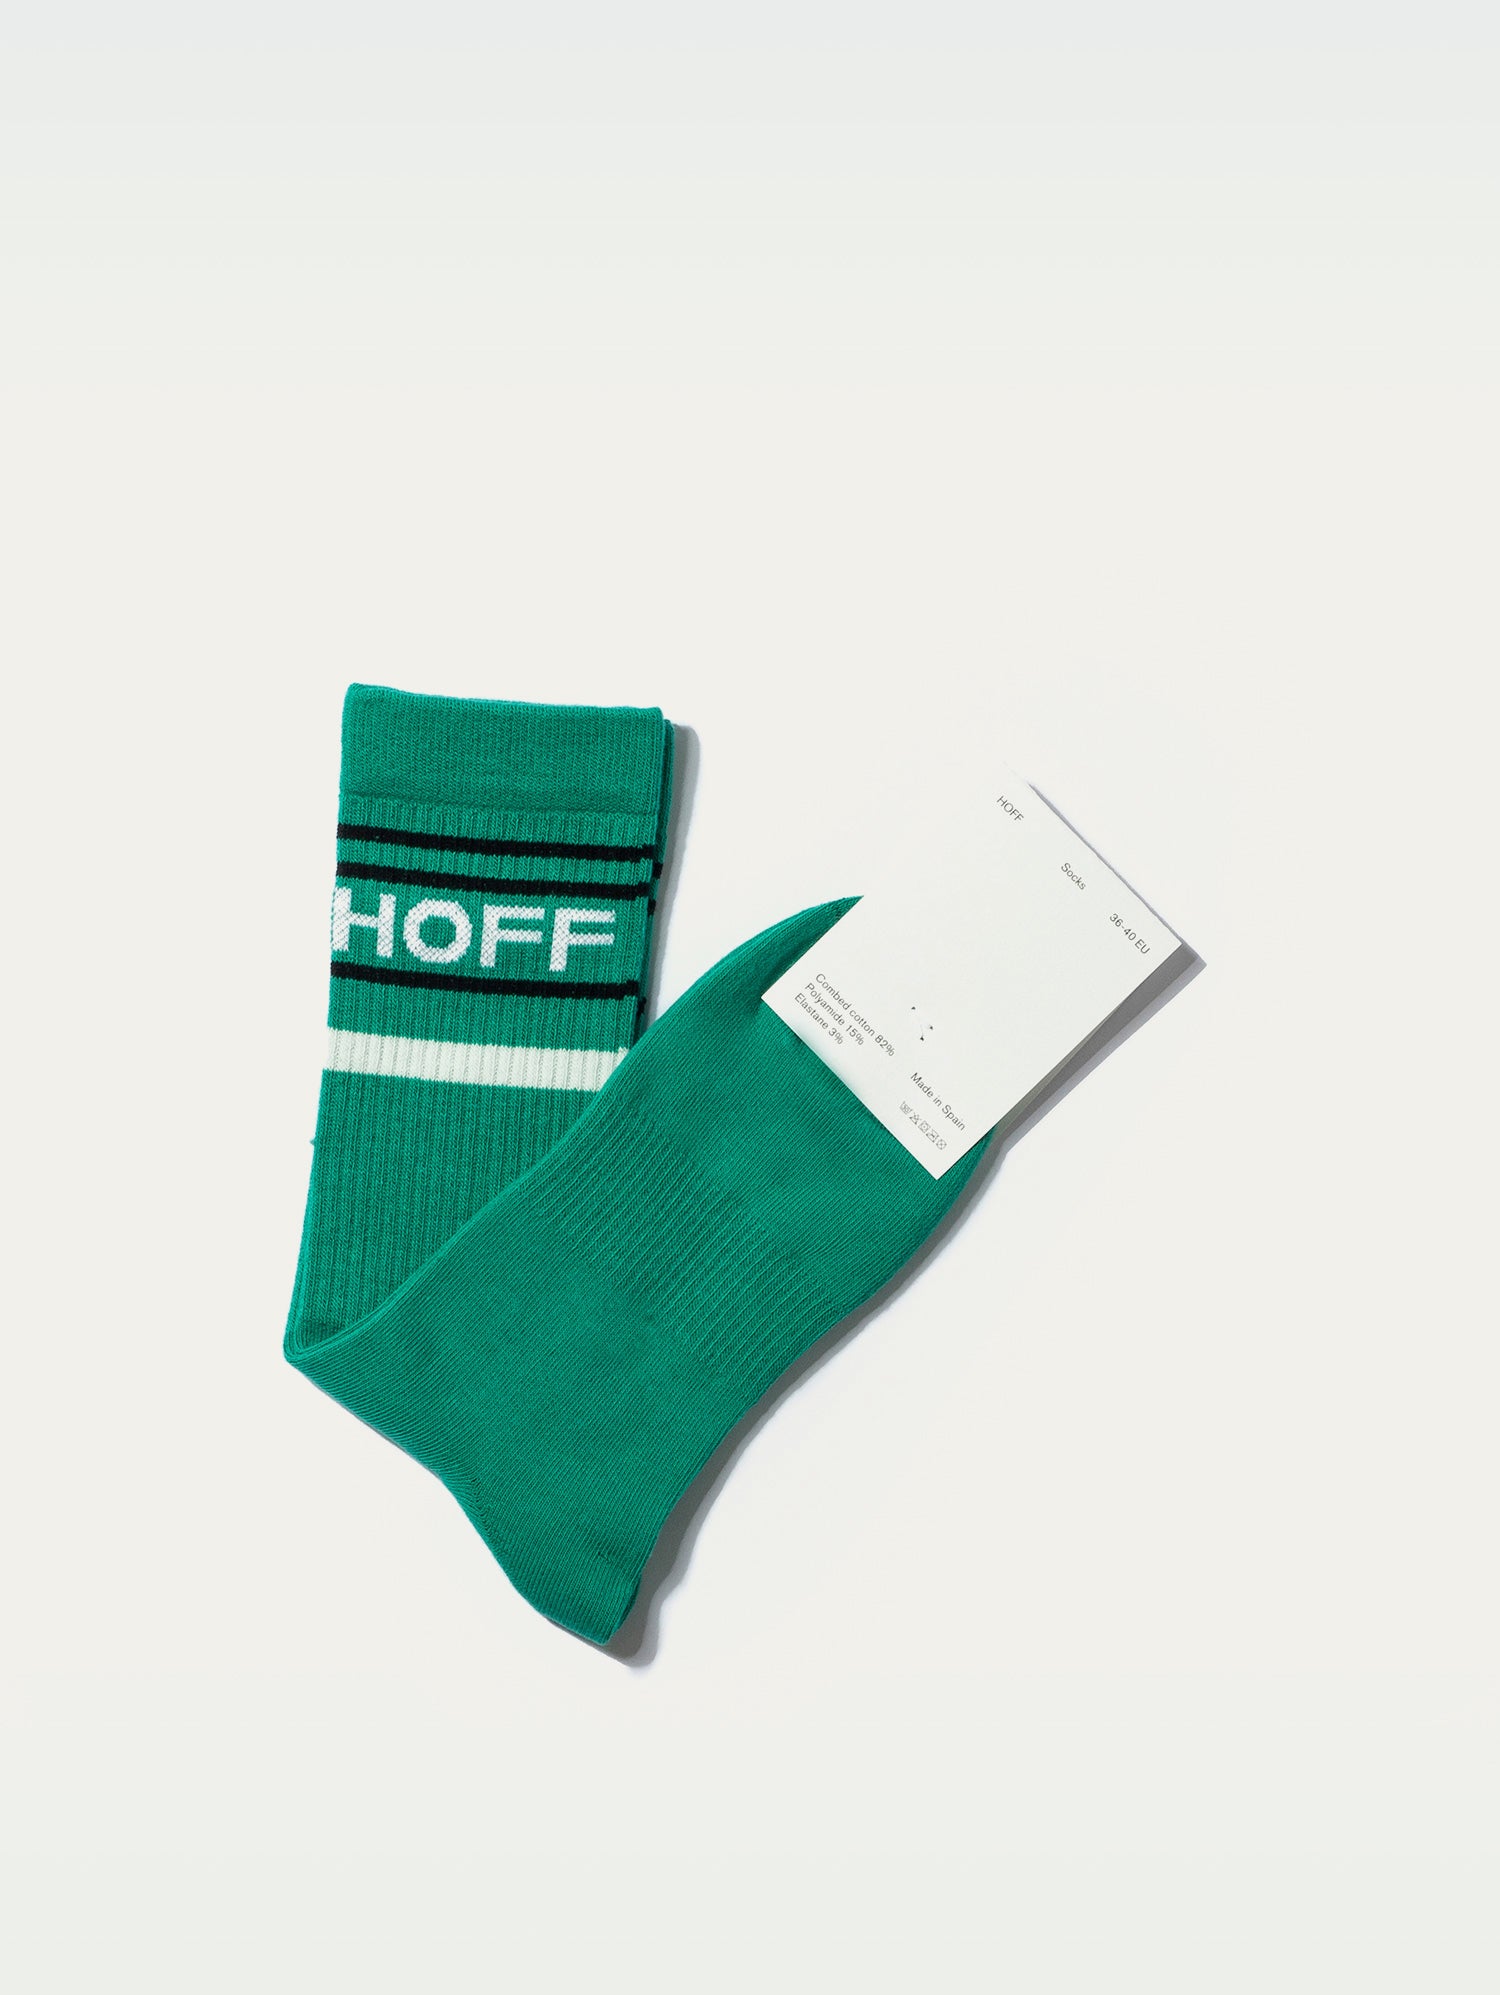 GREEN Socks